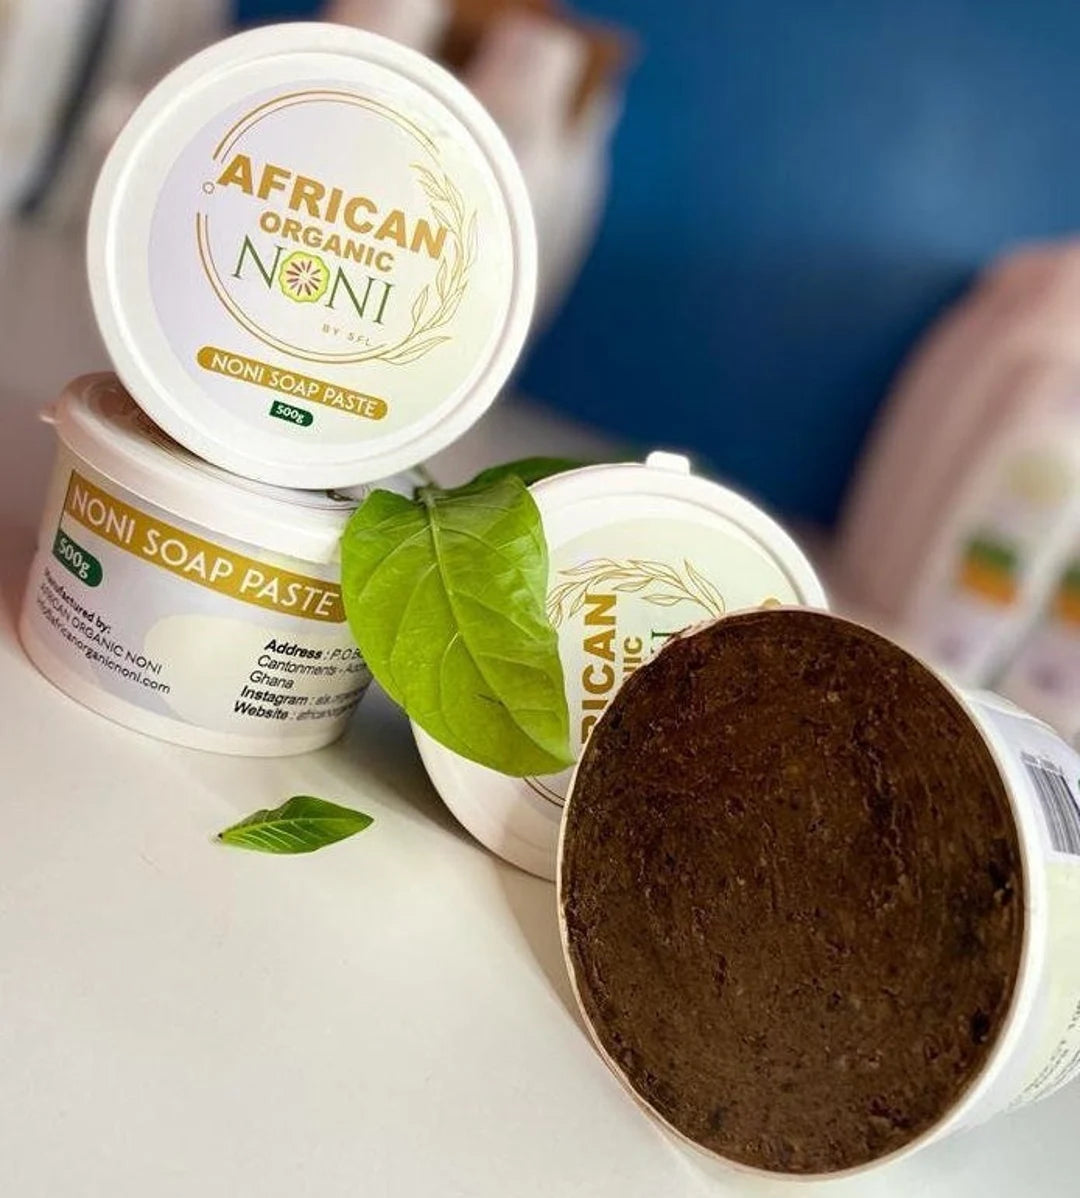 African Organic Noni Soap Paste - 500g